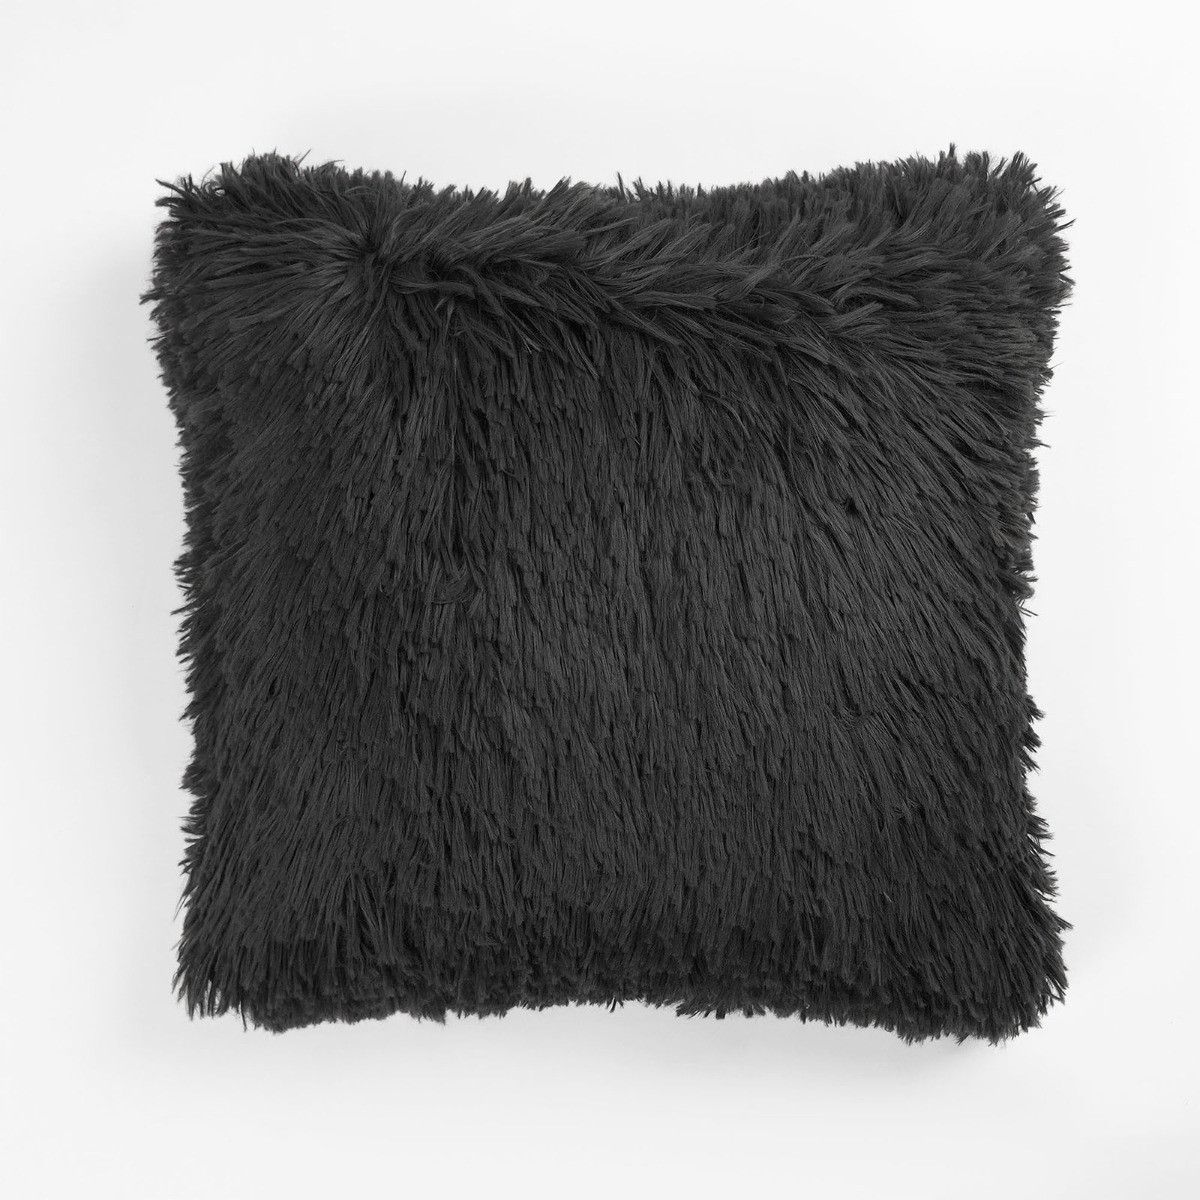 Sienna Luxury Faux Mongolian Fur Cushion Covers - Charcoal>